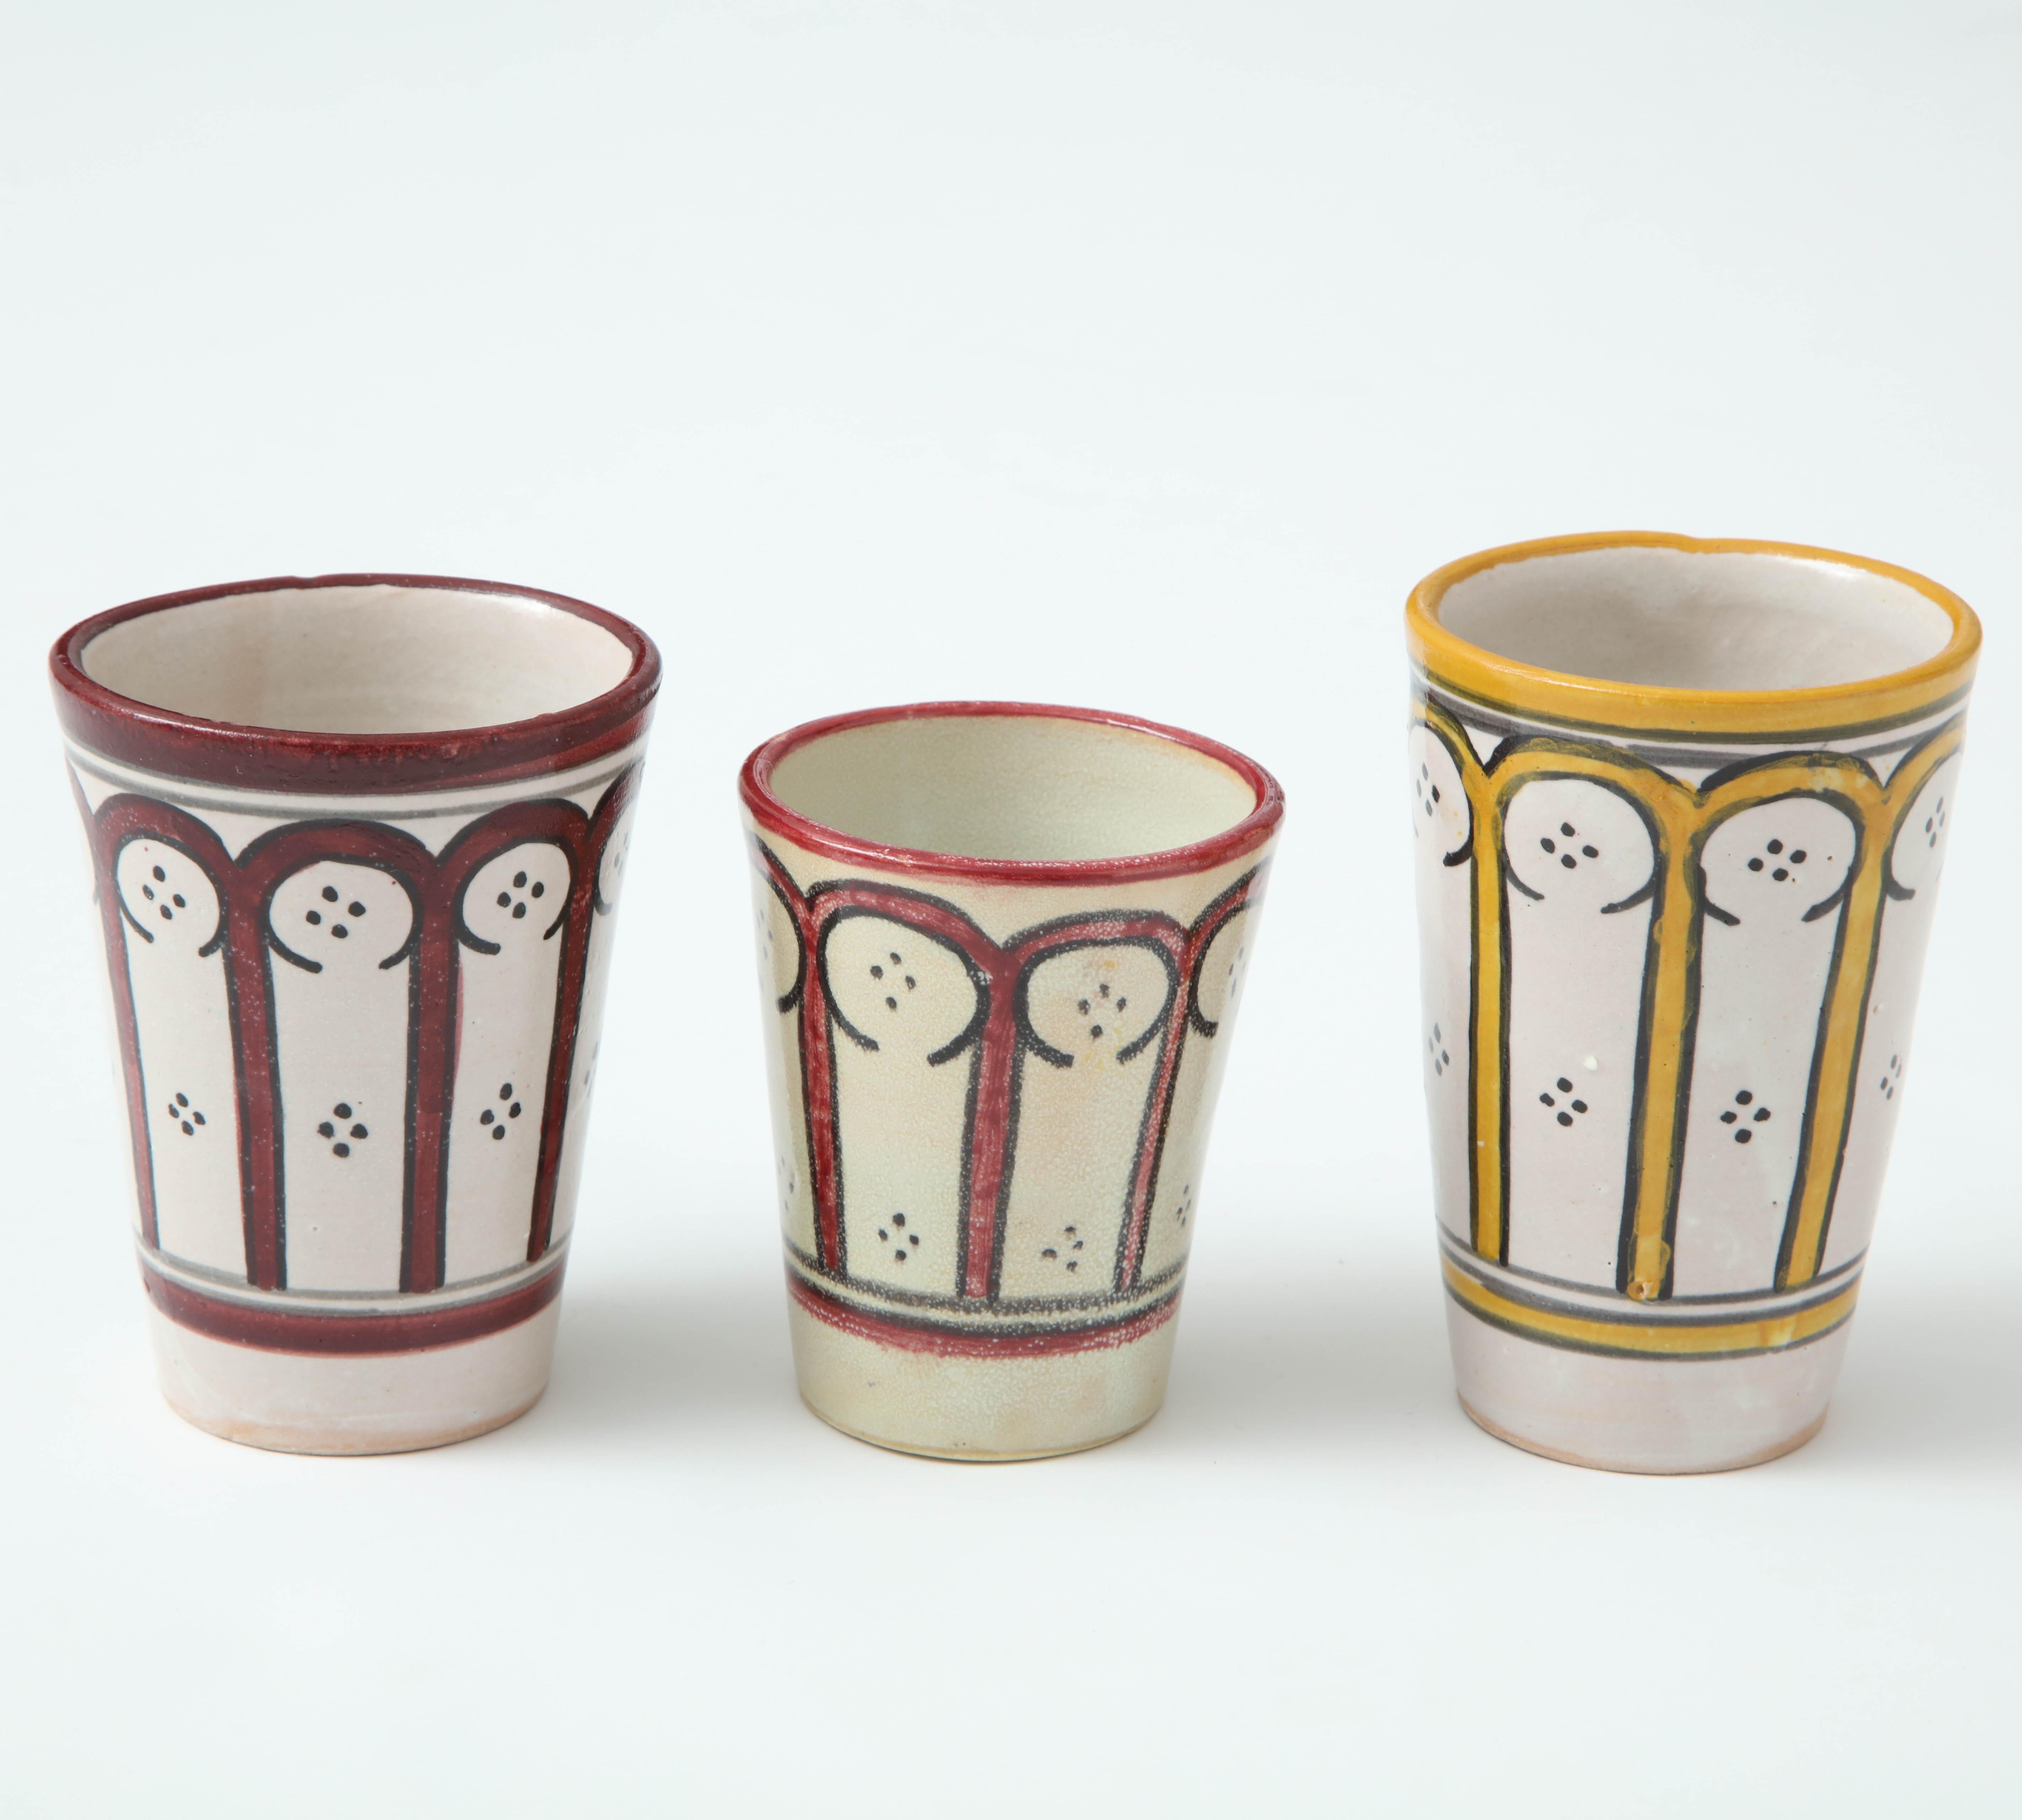 Ceramic Vessel, Red, Black and Cream, Handcrafted, Morocco, Contemporary 1